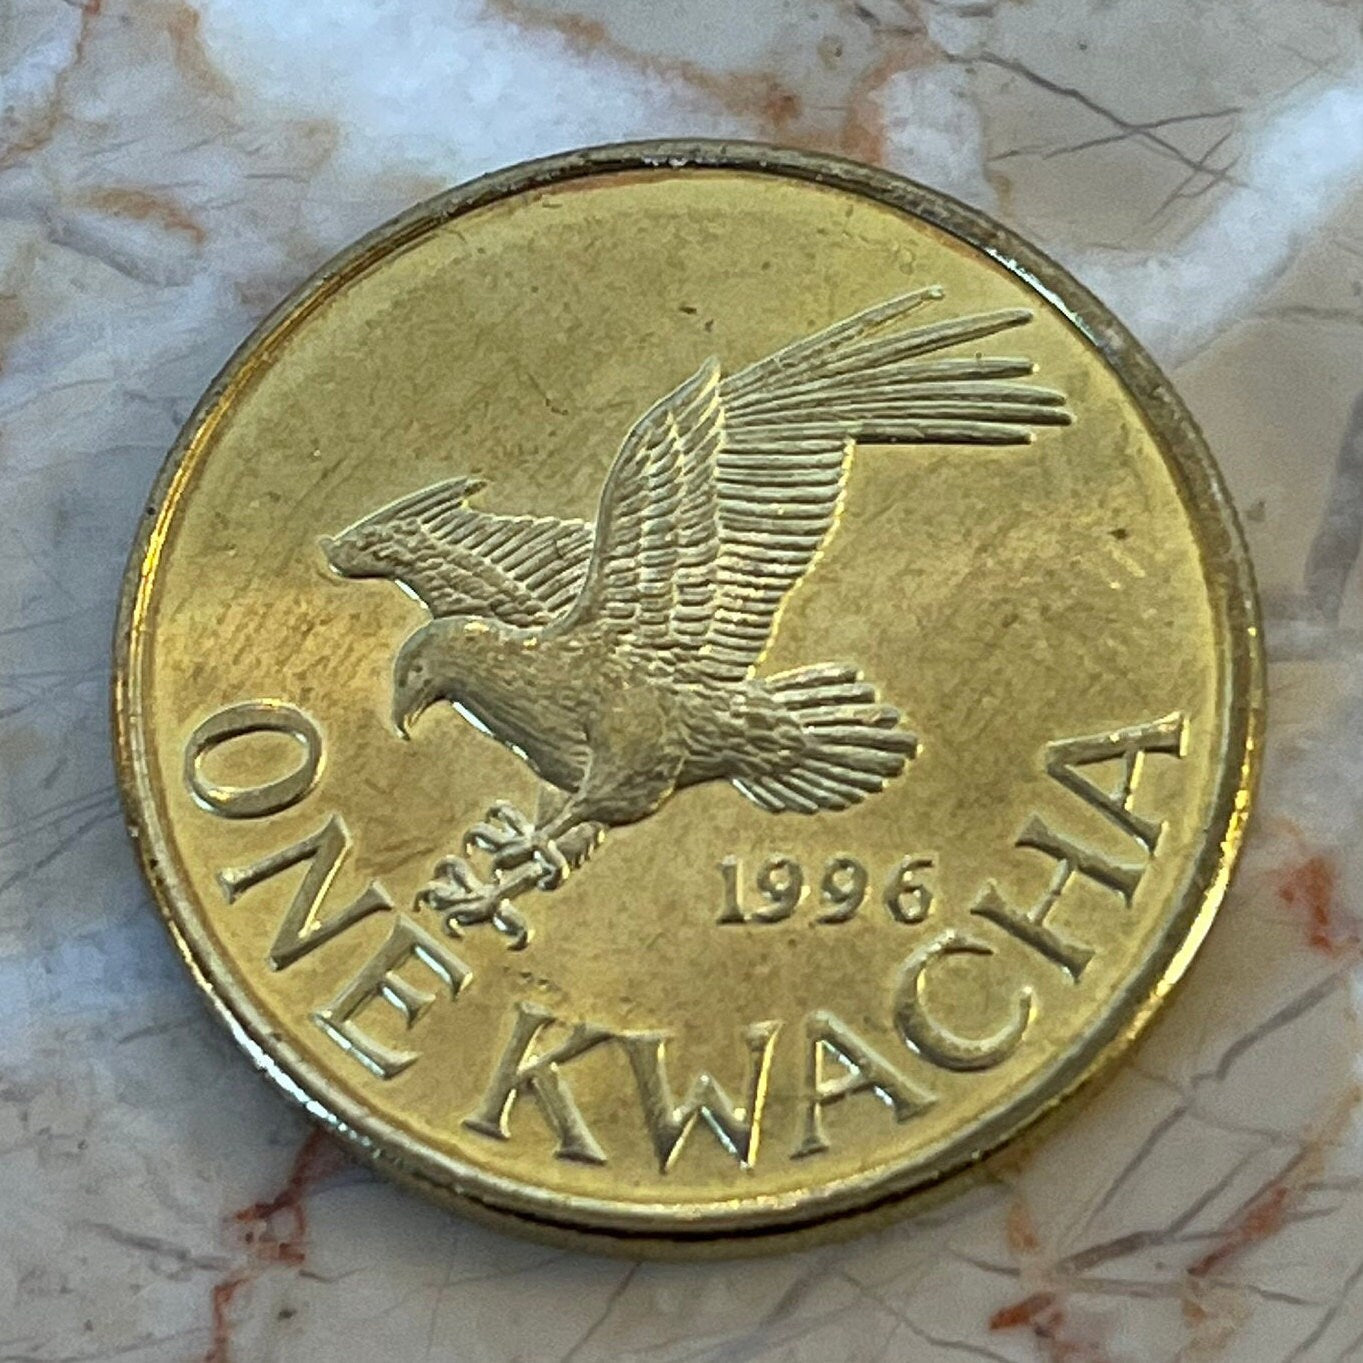 Fish Eagle & President Muluzi Malawi 1 Kwacha Authentic Coin Money for Jewelry and Craft Making (President Bakili Muluzi)